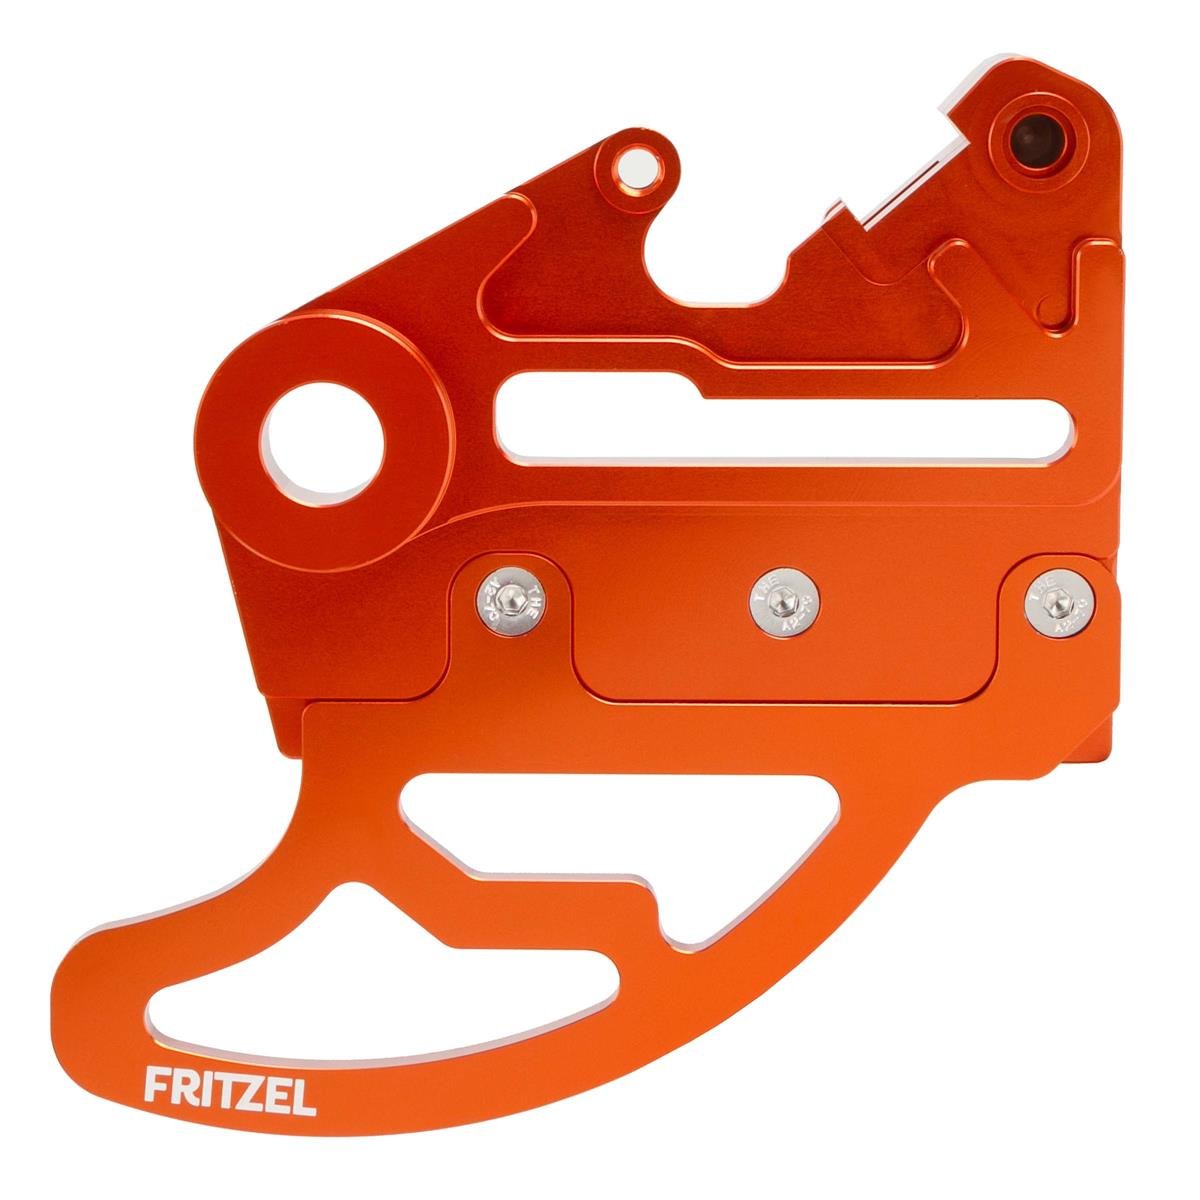 FRITZEL Protège Disque de Frein Steinbrecher KTM SXF 350 11, SXF 450 07-11, EXC 450 04-11, Arrière, Orange